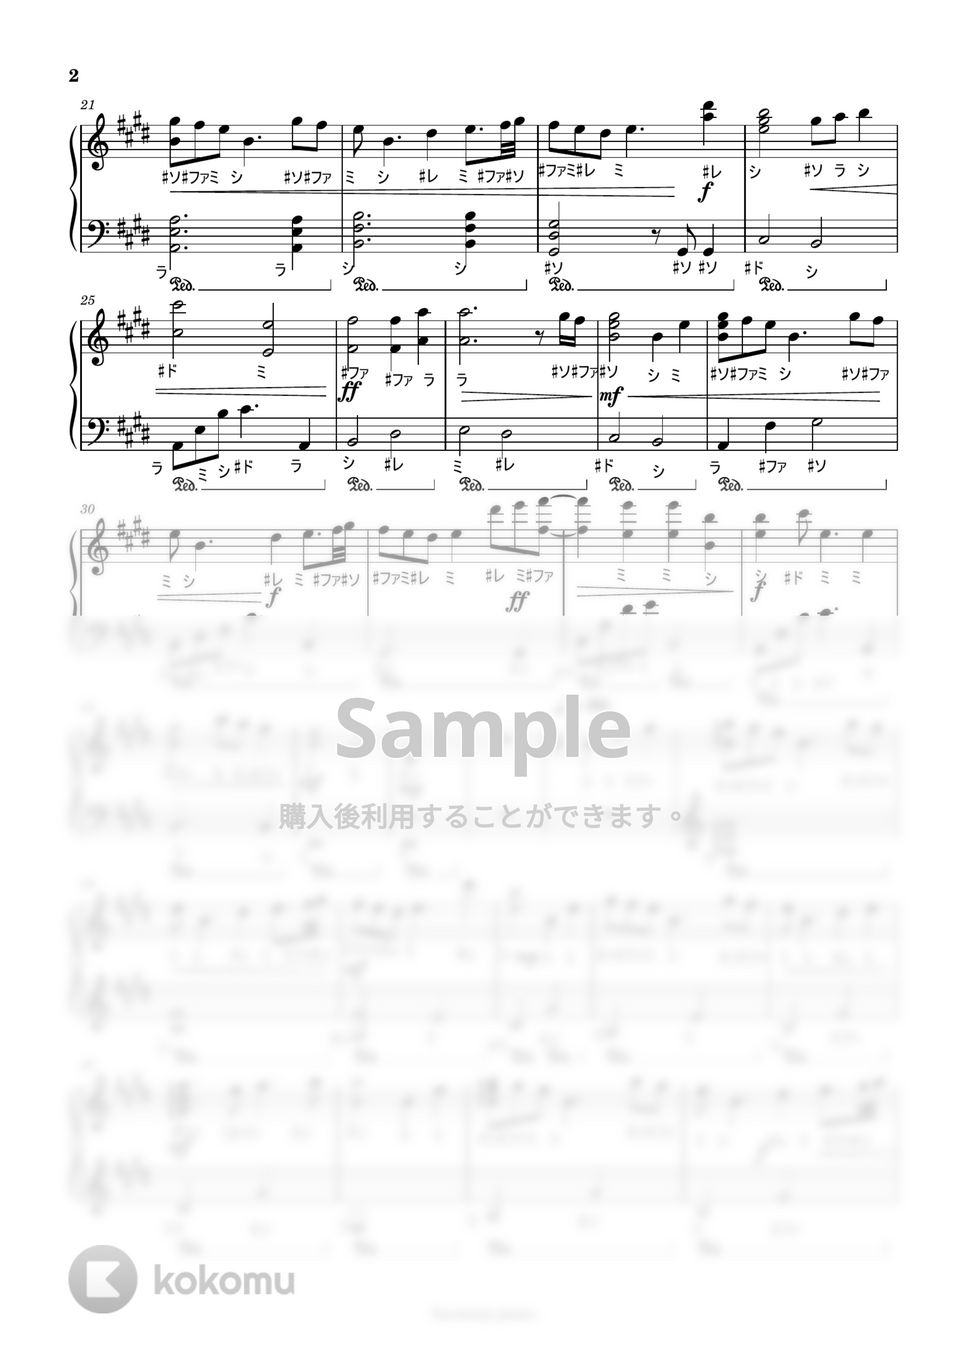 silent - [ドレミ付]silent main theme (目黒蓮×川口春奈) by harmony piano